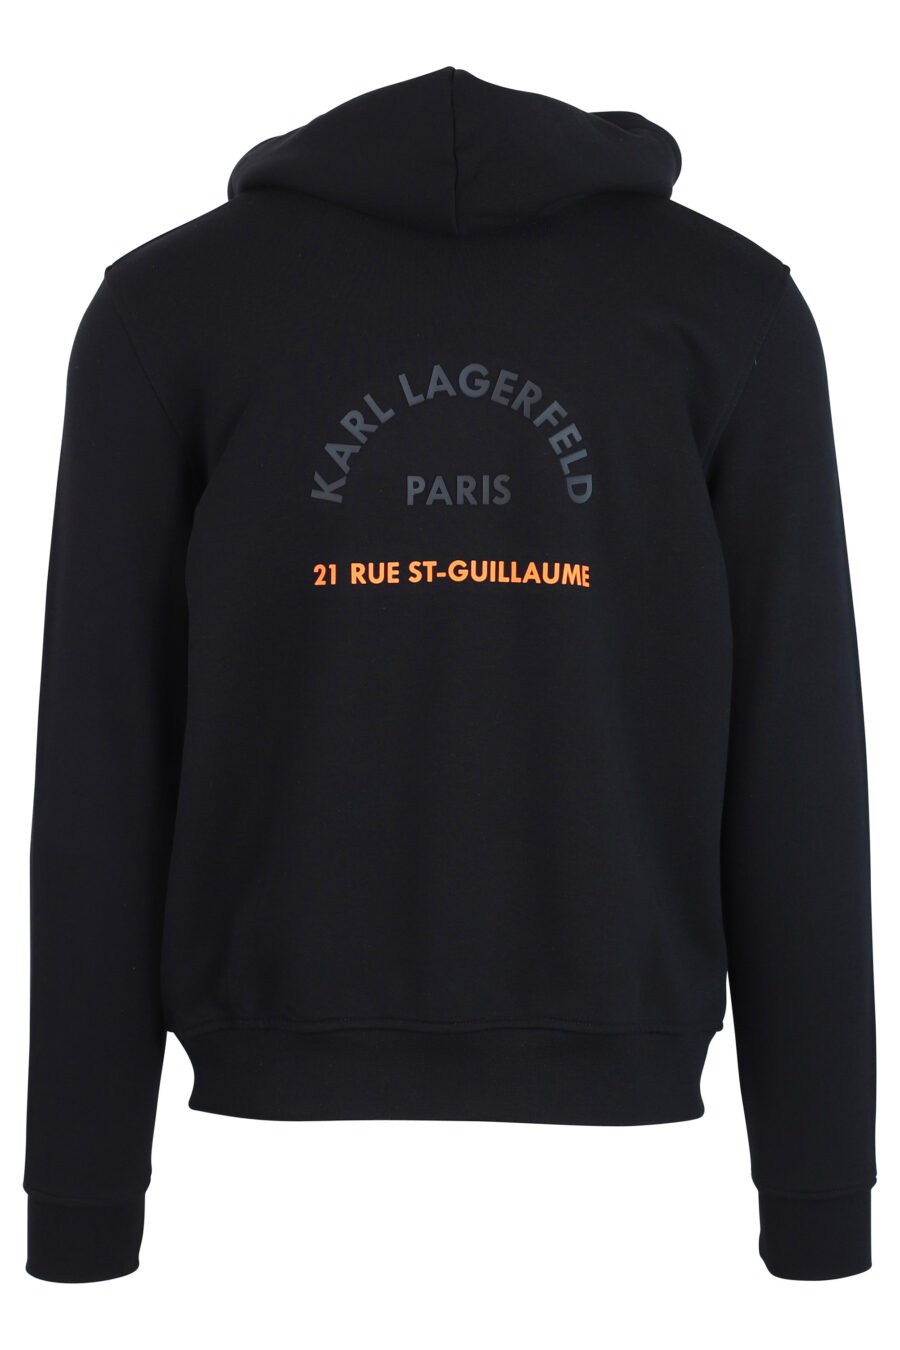 Sudadera negra con capucha y logo "rue st guillaume" naranja - IMG 0795